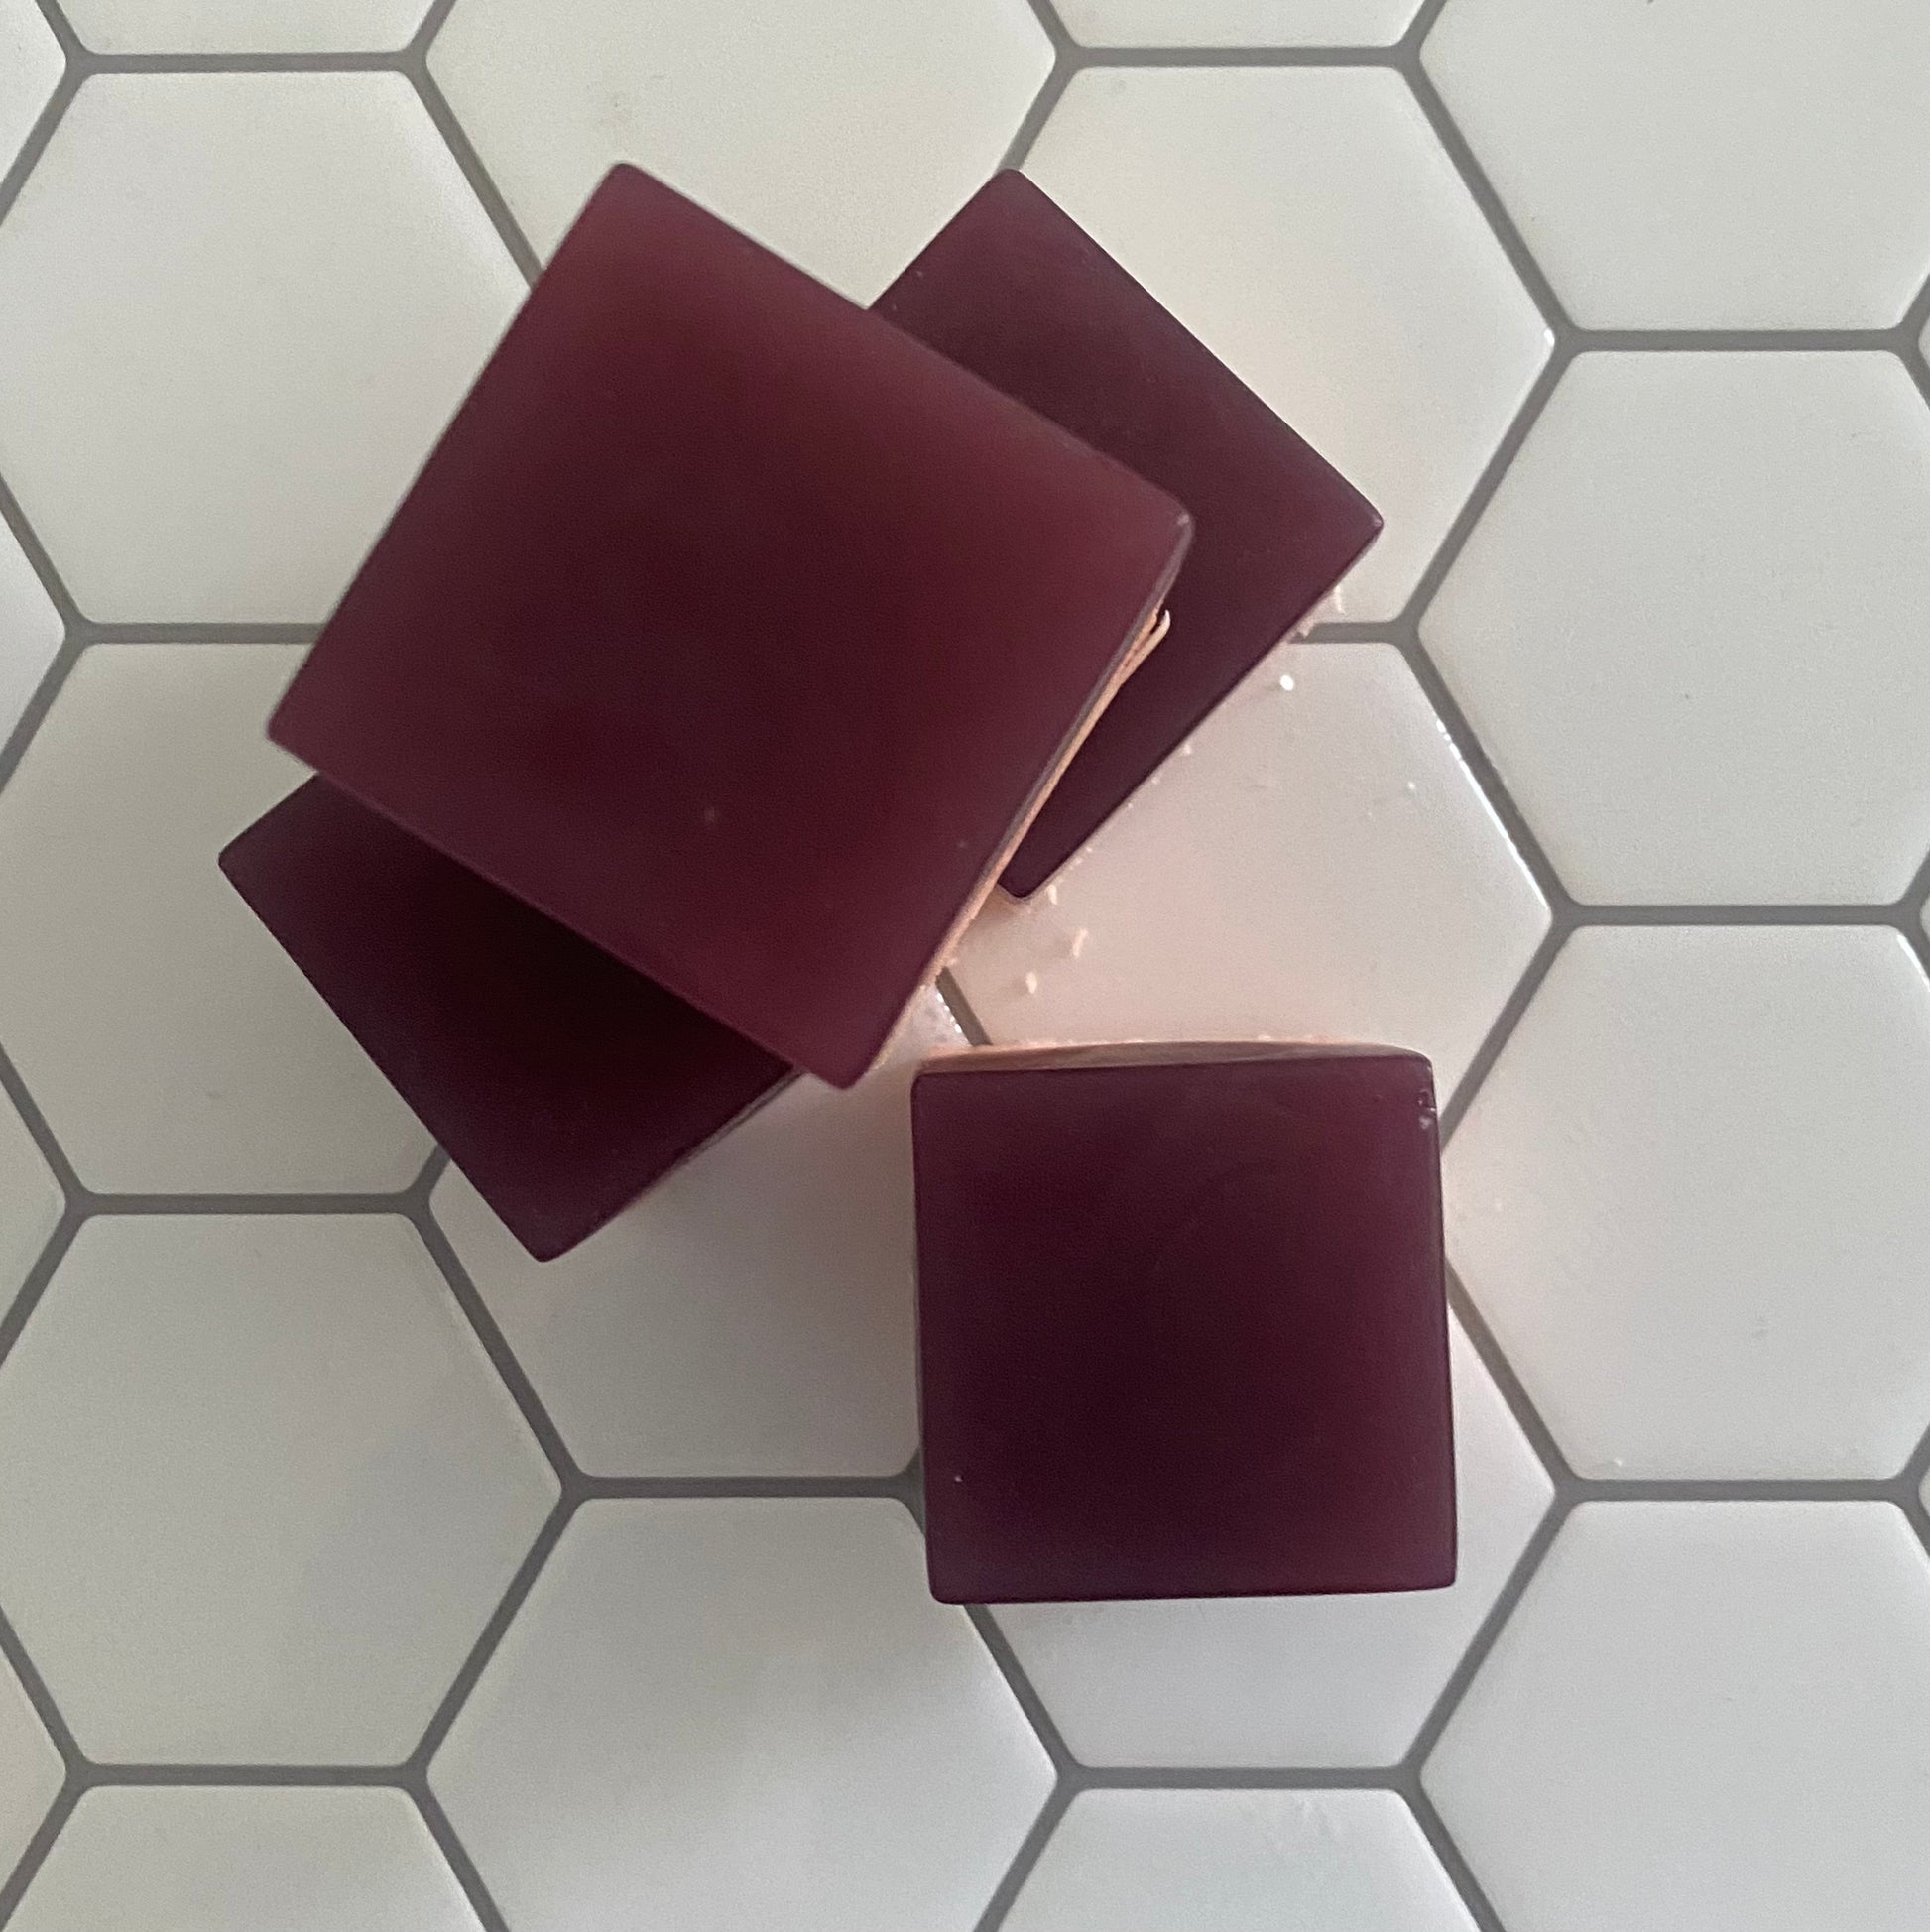 Fruit loops soap. 2 tone purple & orange handmade soap made by zabel designs. Vegan friendly 